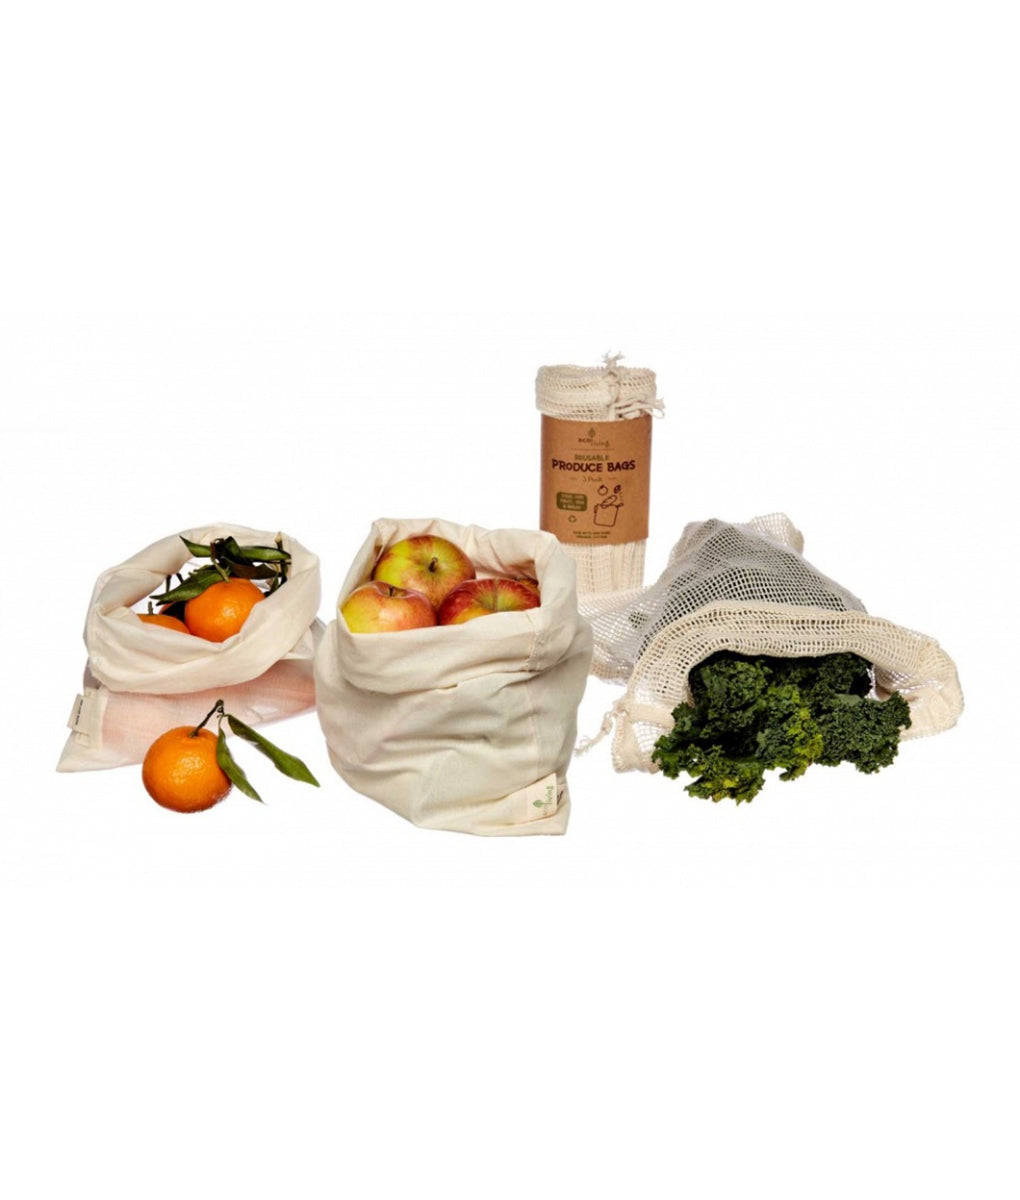 Eco Living Organic Bread & Produce Bag - x3 Pack